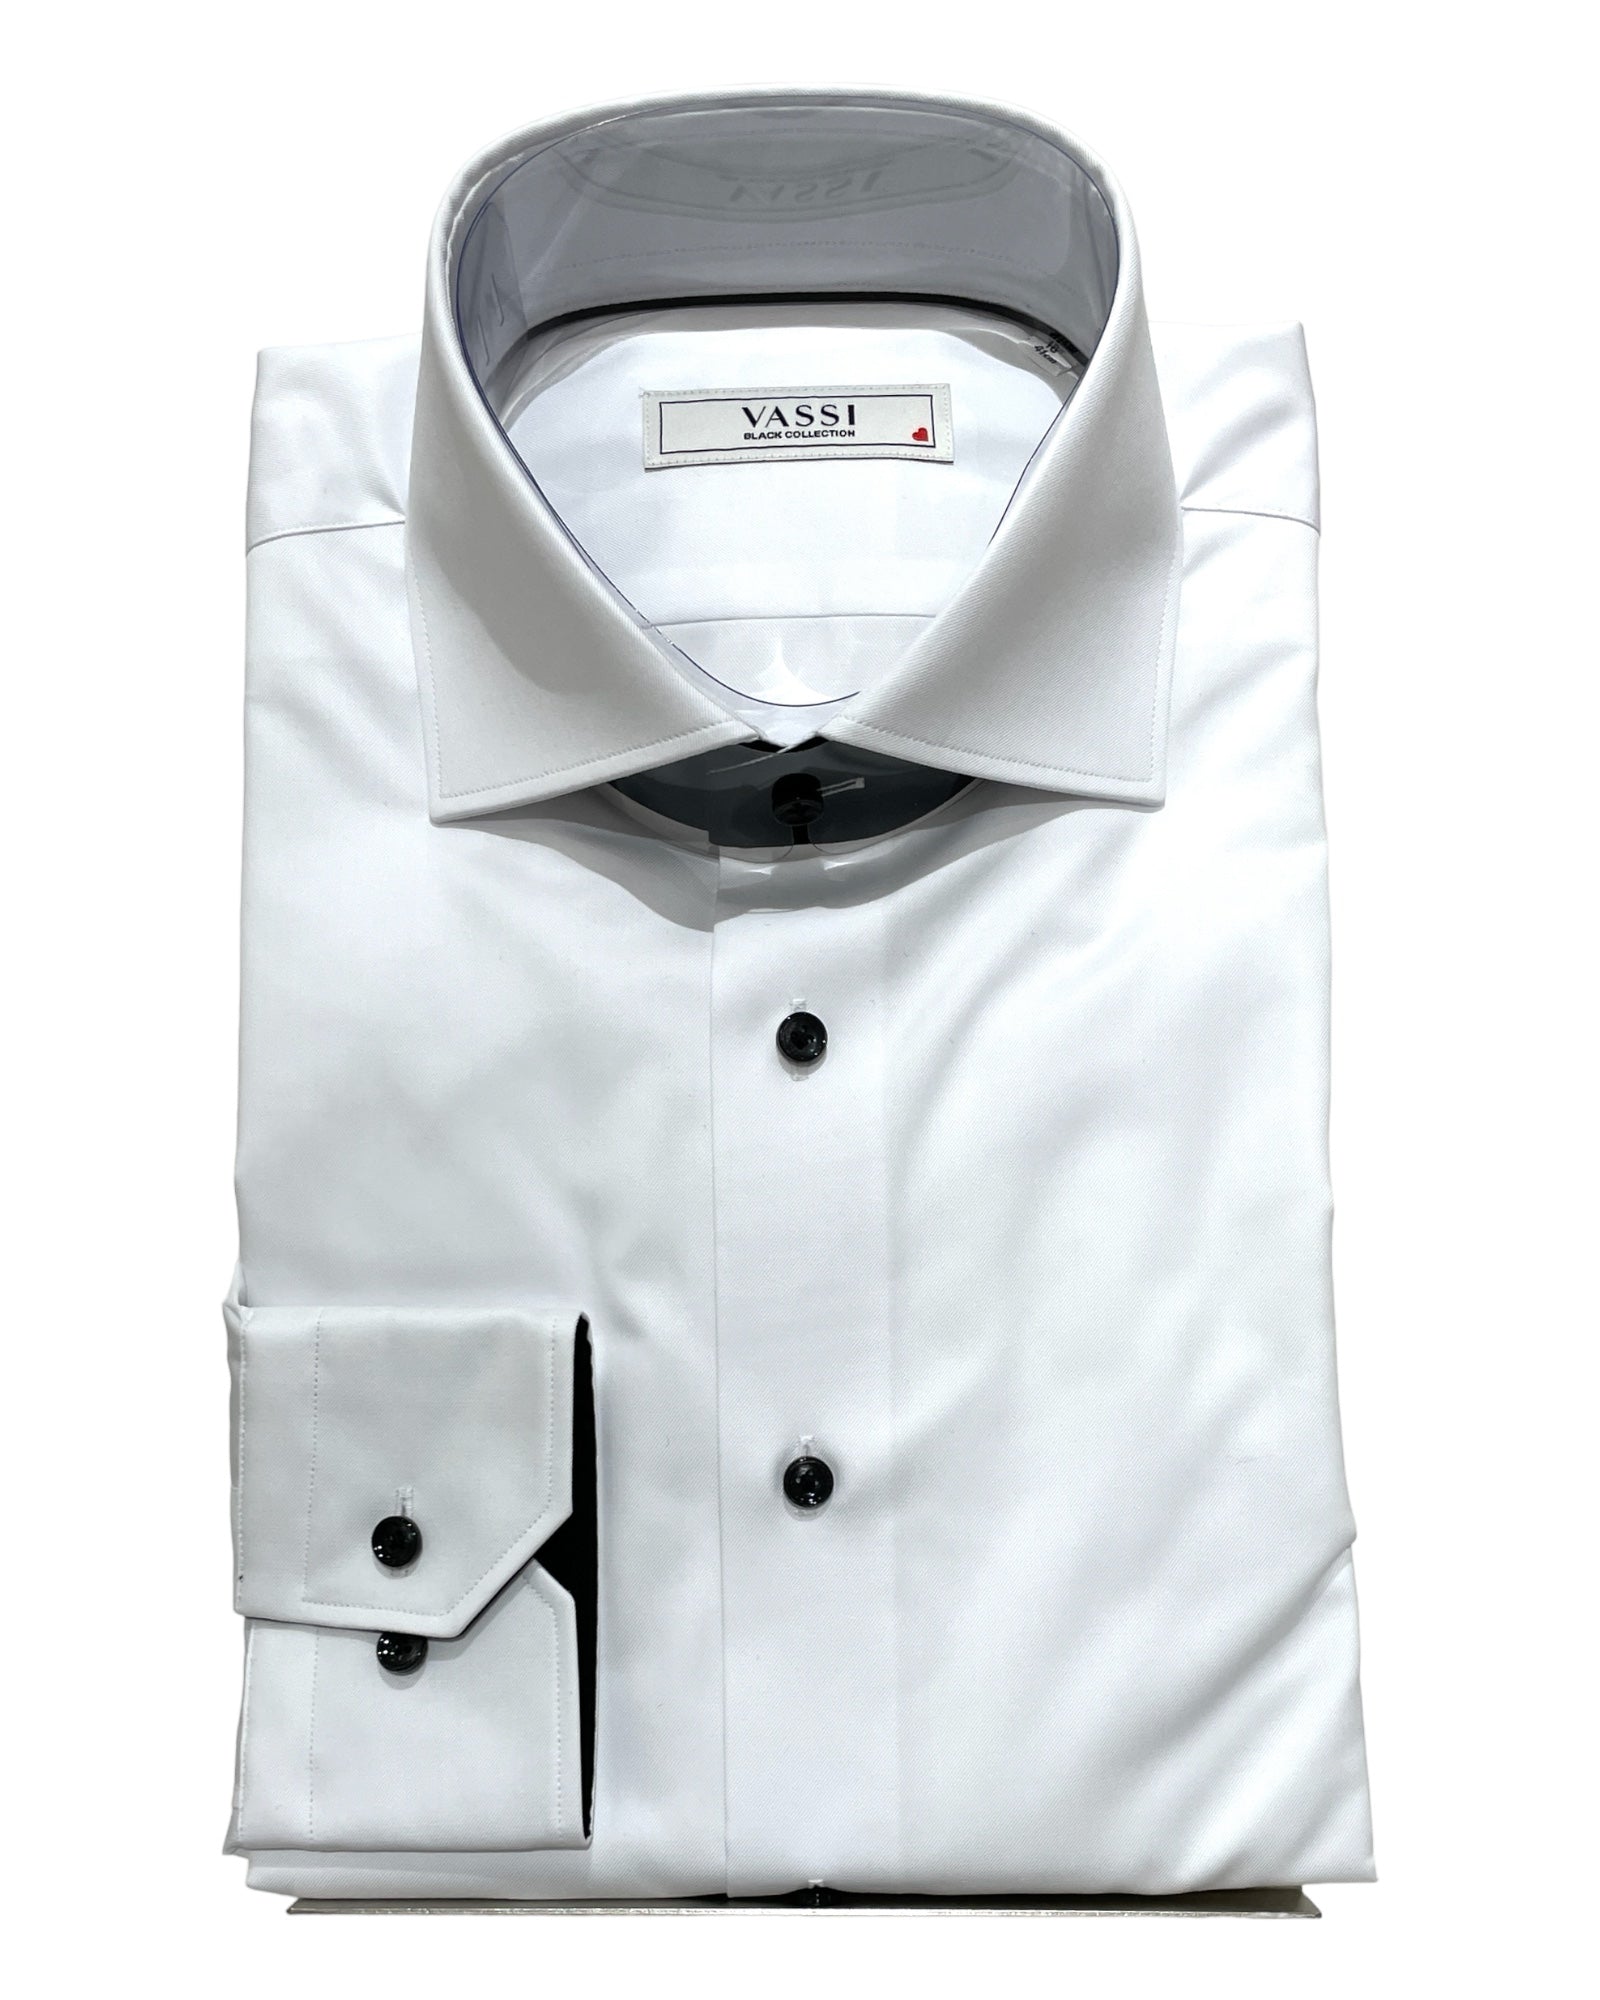 Semi-Formal Shirt - White, Black Buttons, Black Trim DRESS SHIRTS41